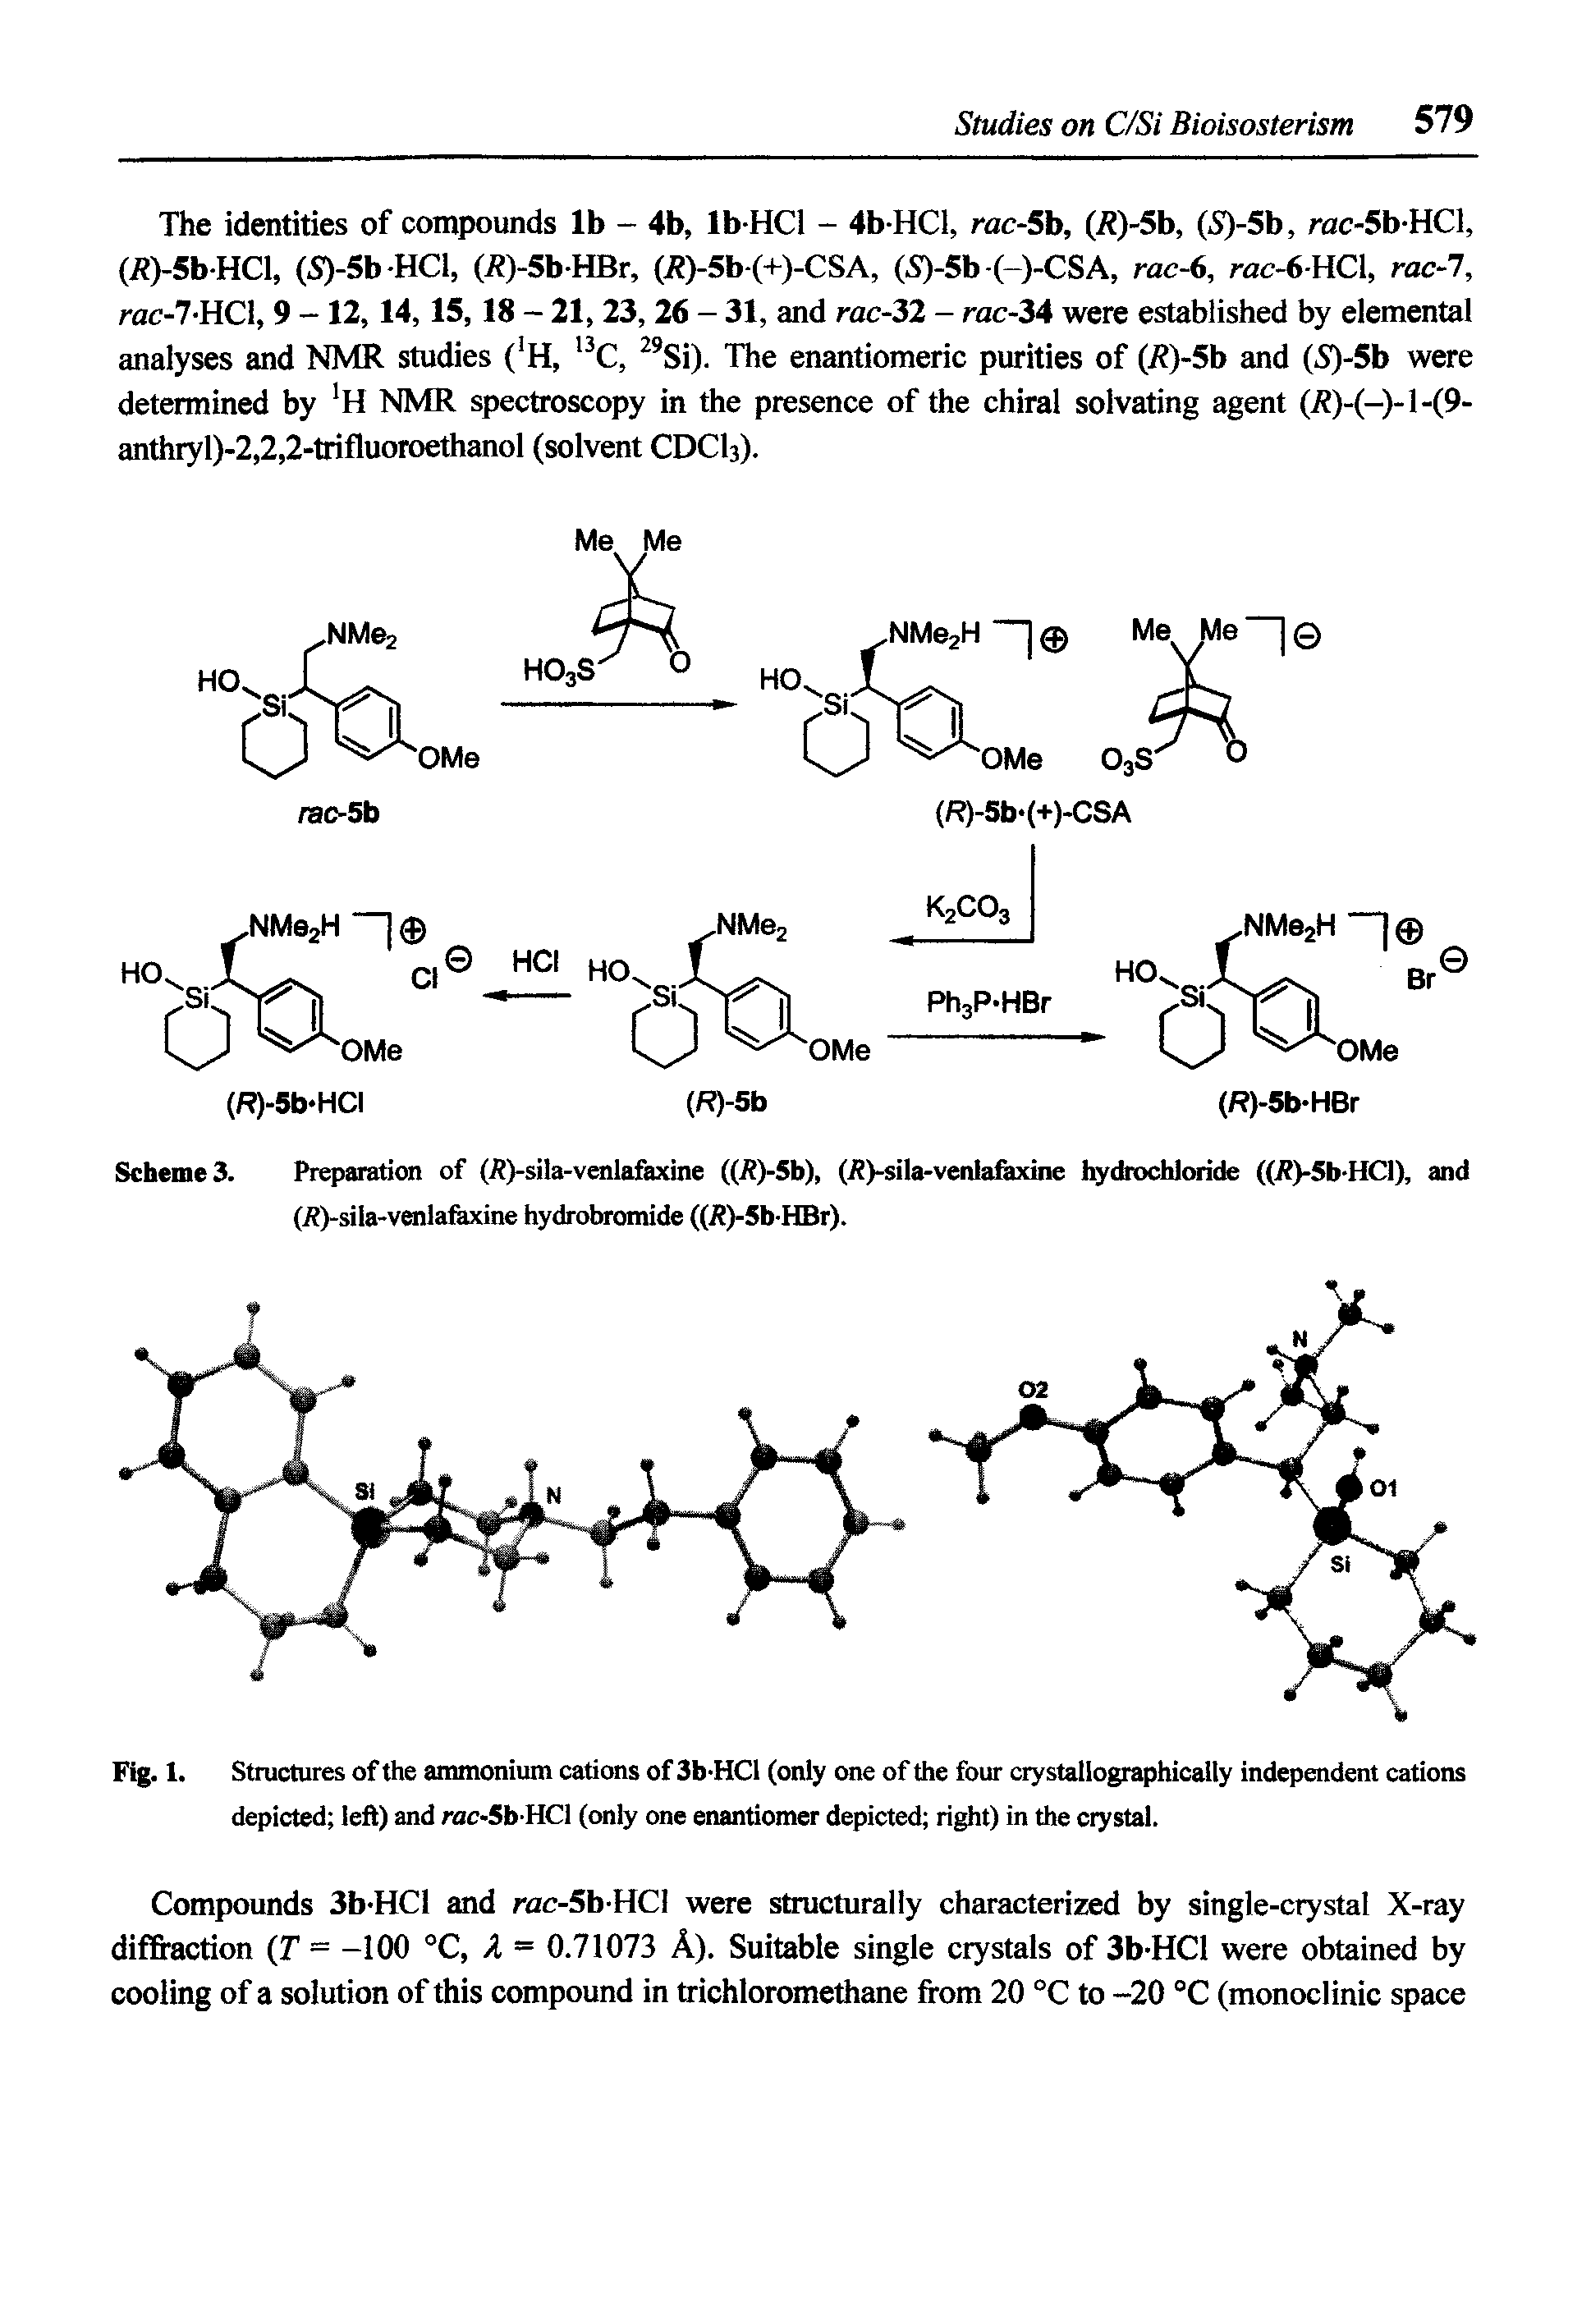 Schemes. Preparation of (i )-sita-venlafaxine ((/ )-5b), (/ )-sila-venlafexine hydrochloride ((iJ)-5b HCl), and (i )-sila-venlafexine hydrobromide ((i )-5b-HBr).